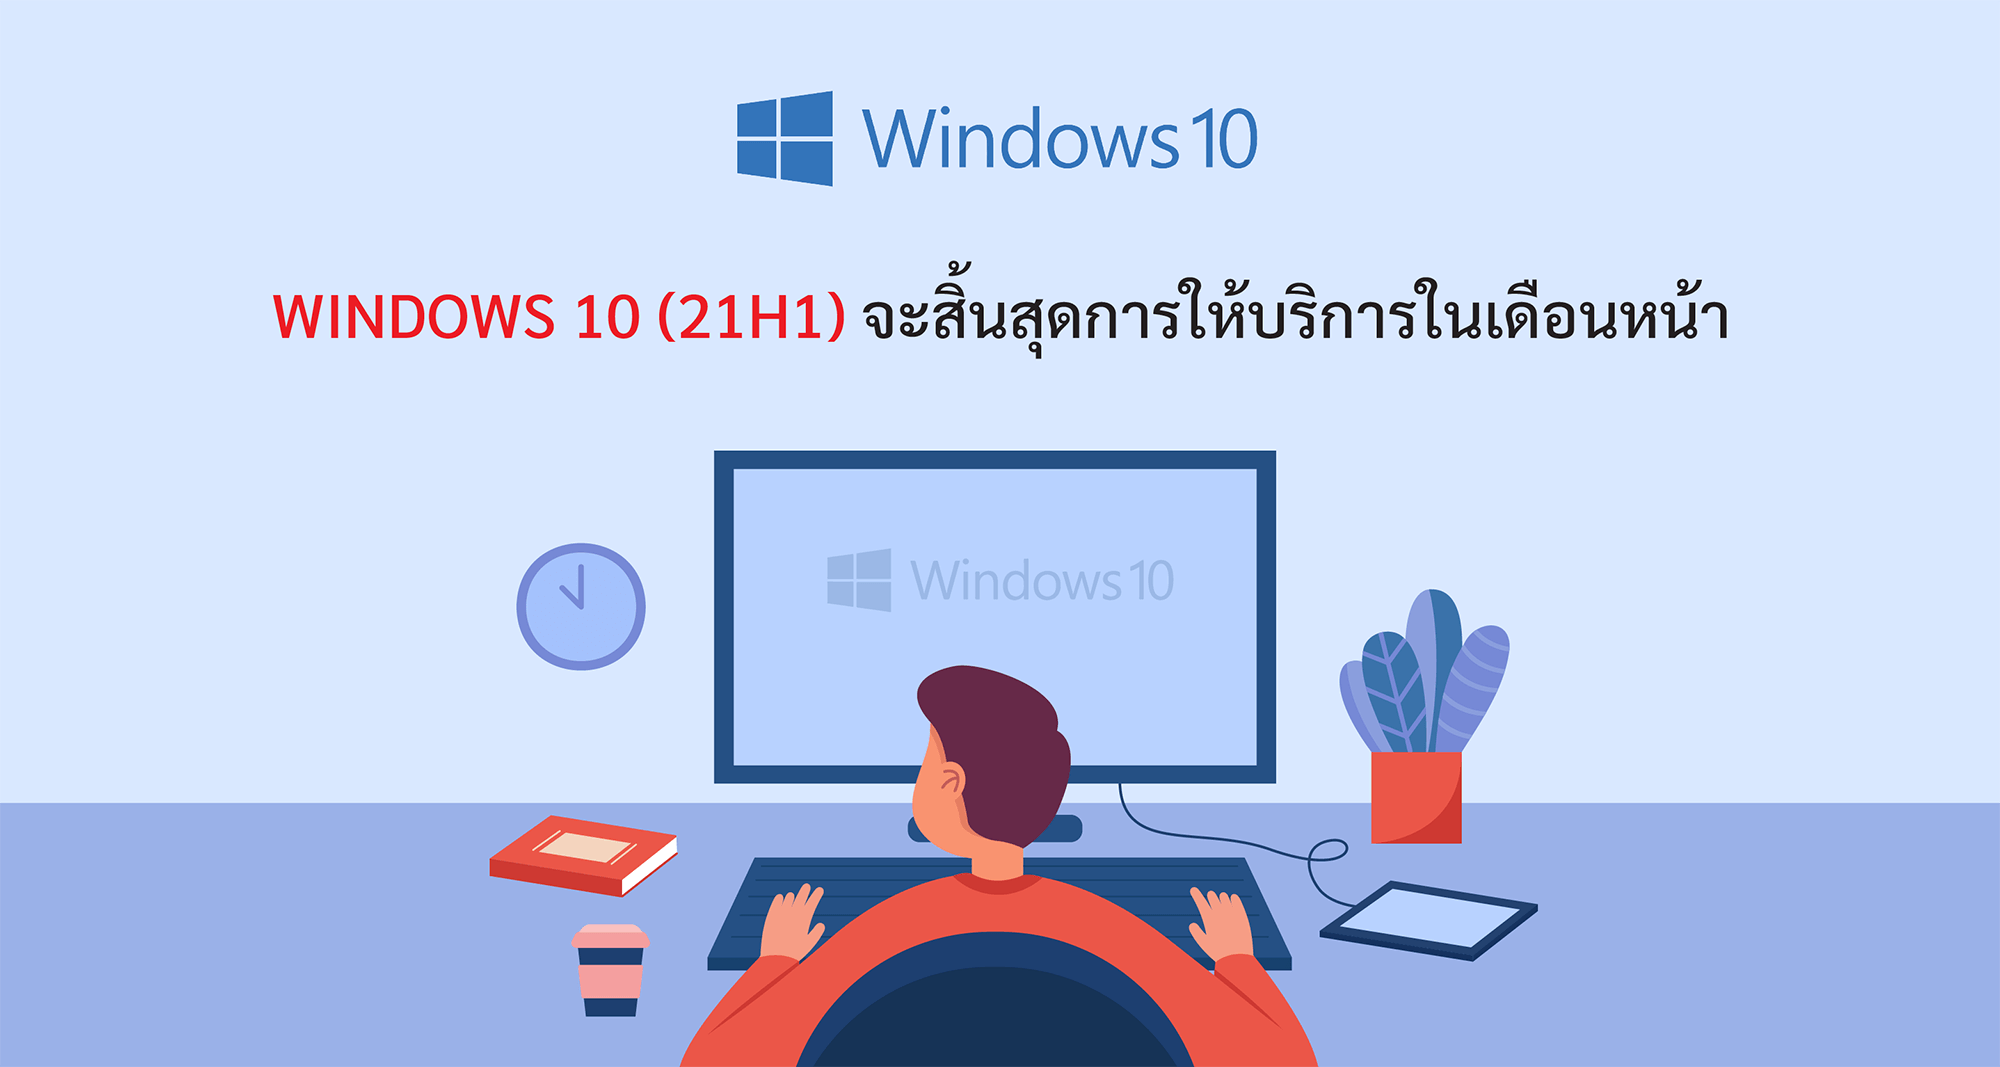 Windows 10 (21H1) จะสิ้นสุดการให้บริการในเดือนหน้า